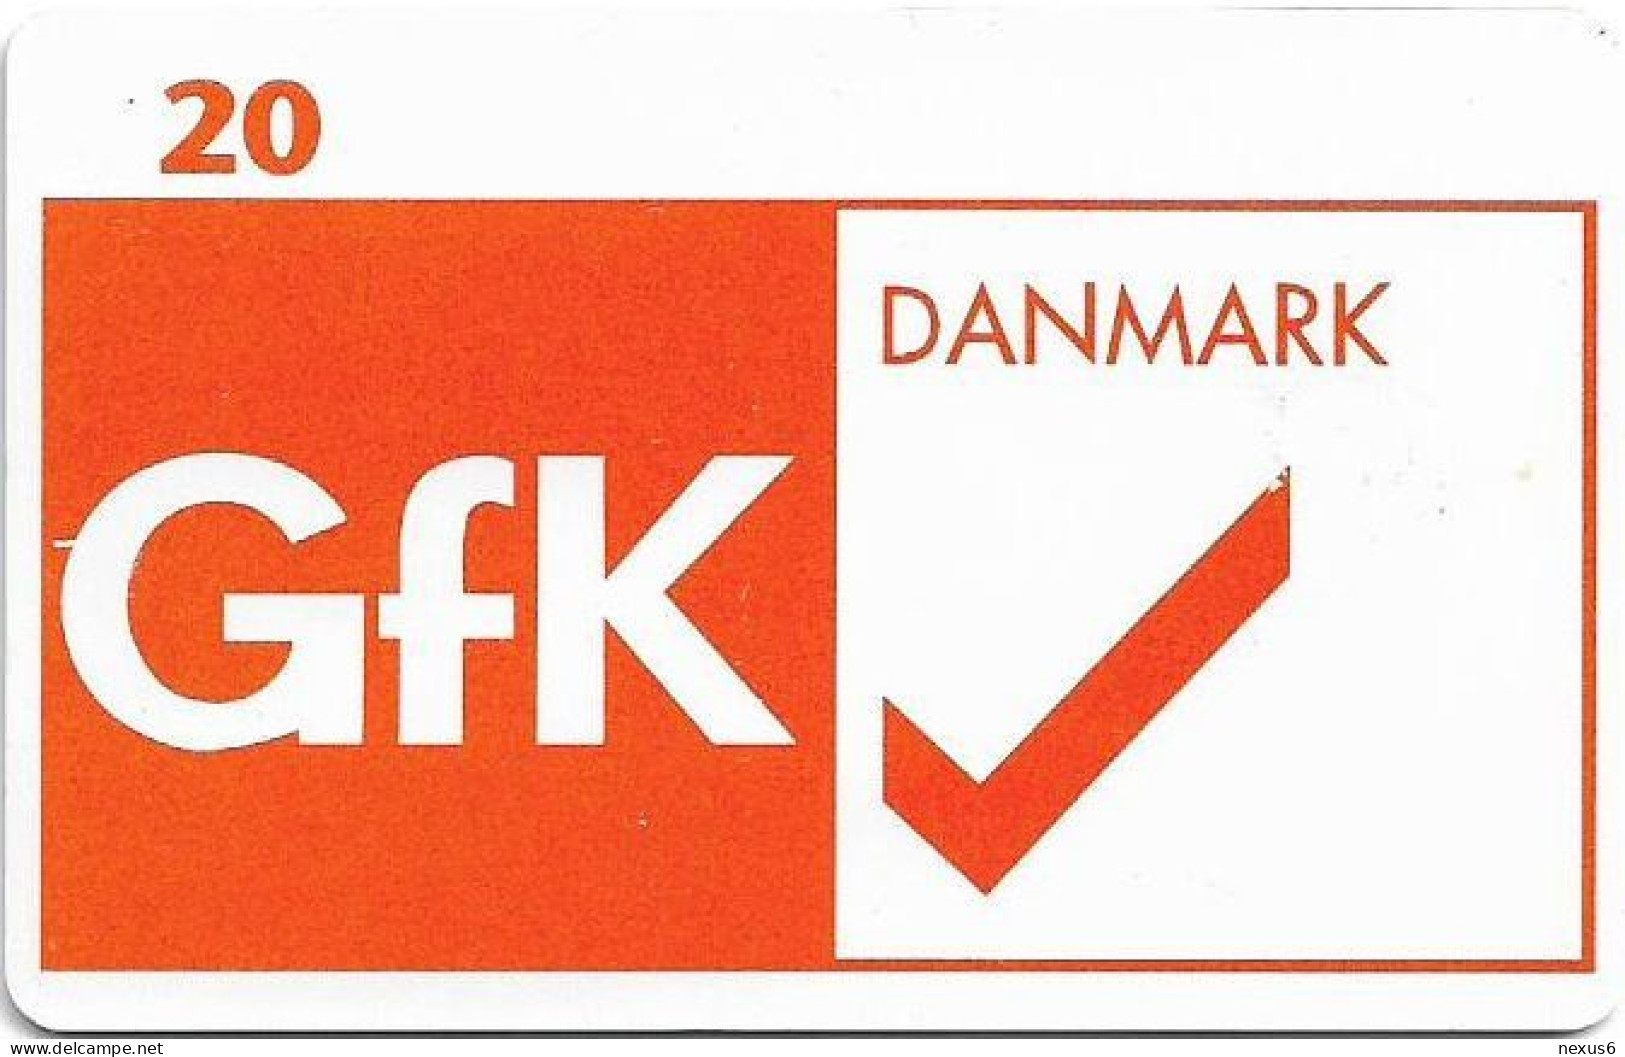 Denmark - Tele Danmark (chip) - GFK Danmark AS - TDP213C - 01.1999, 2.100ex, 20kr, Used - Denmark